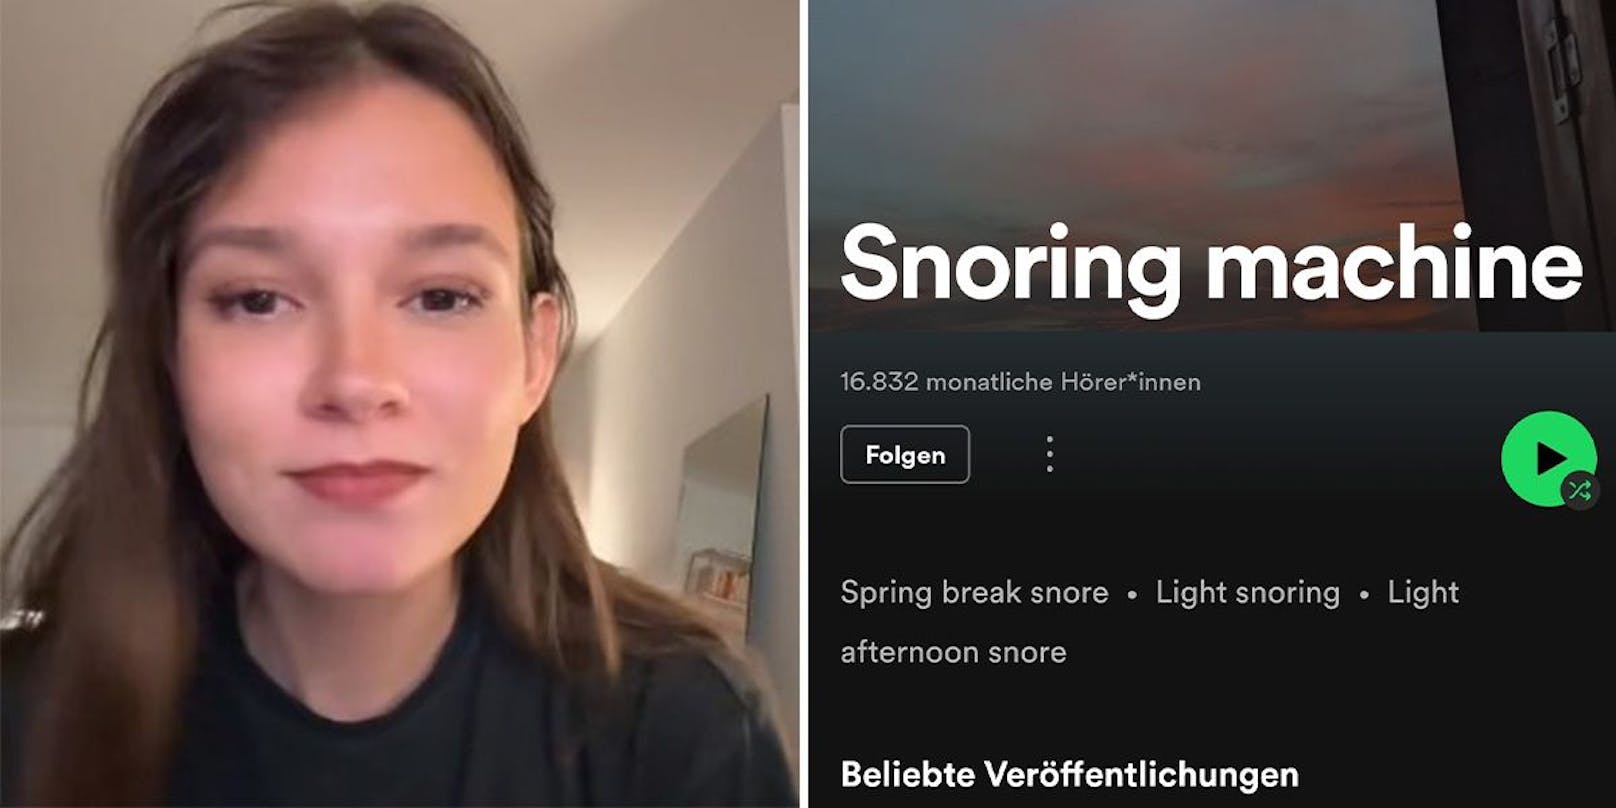 Ana Malfairs Spotify-Account&nbsp;<a href="https://open.spotify.com/artist/7e9BNUSRZ9hEJcOKCvSECV">"Snoring Machine"</a> hat über 16.000 monatliche Hörer. (Bild).